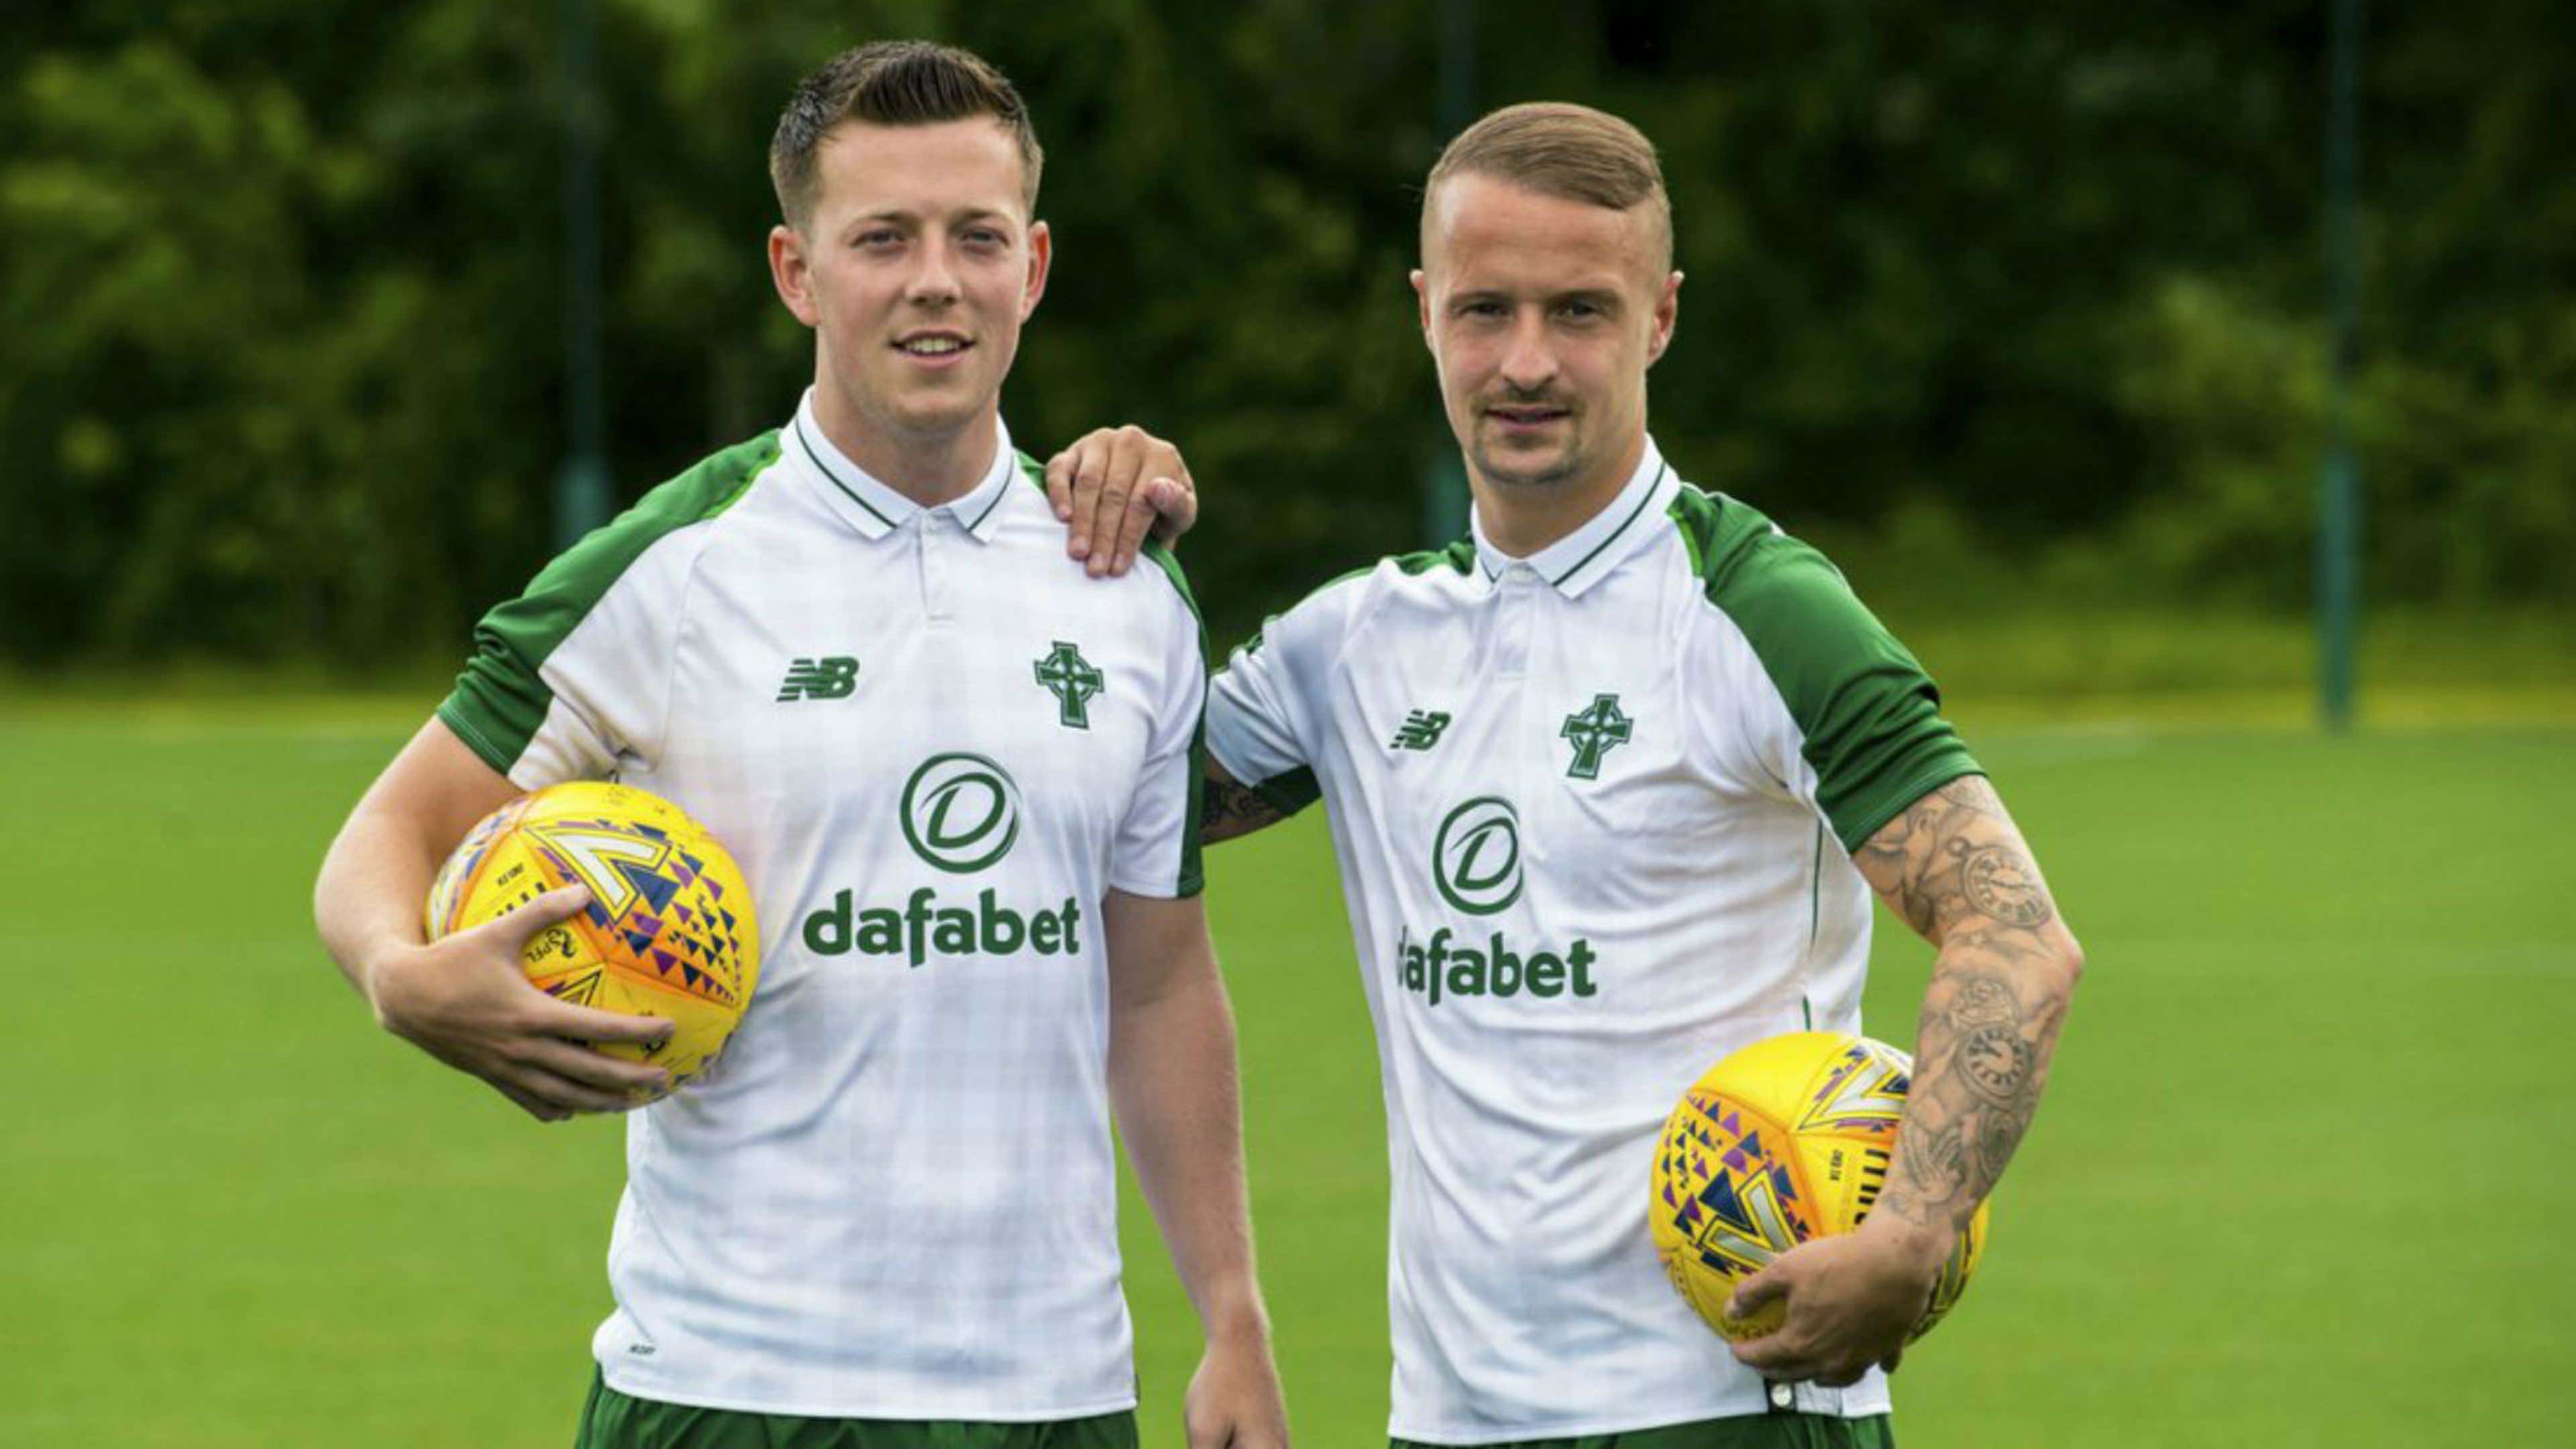 Celtic unveil new 2018/19 away kit celebrating the club's Irish heritage